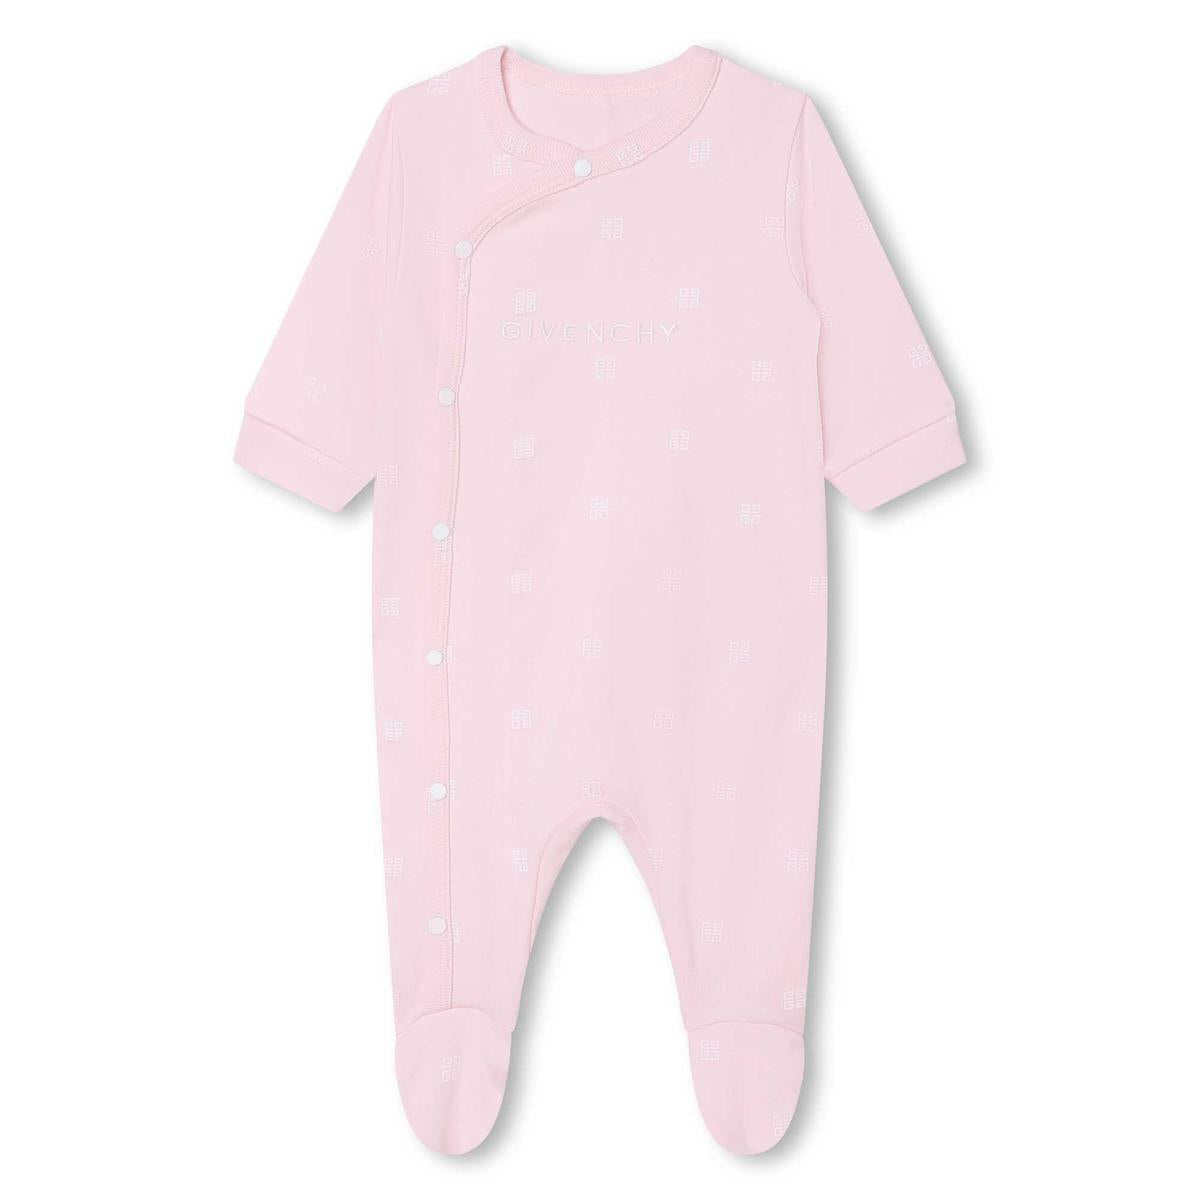 Baby Girls Pink Cotton Babysuit